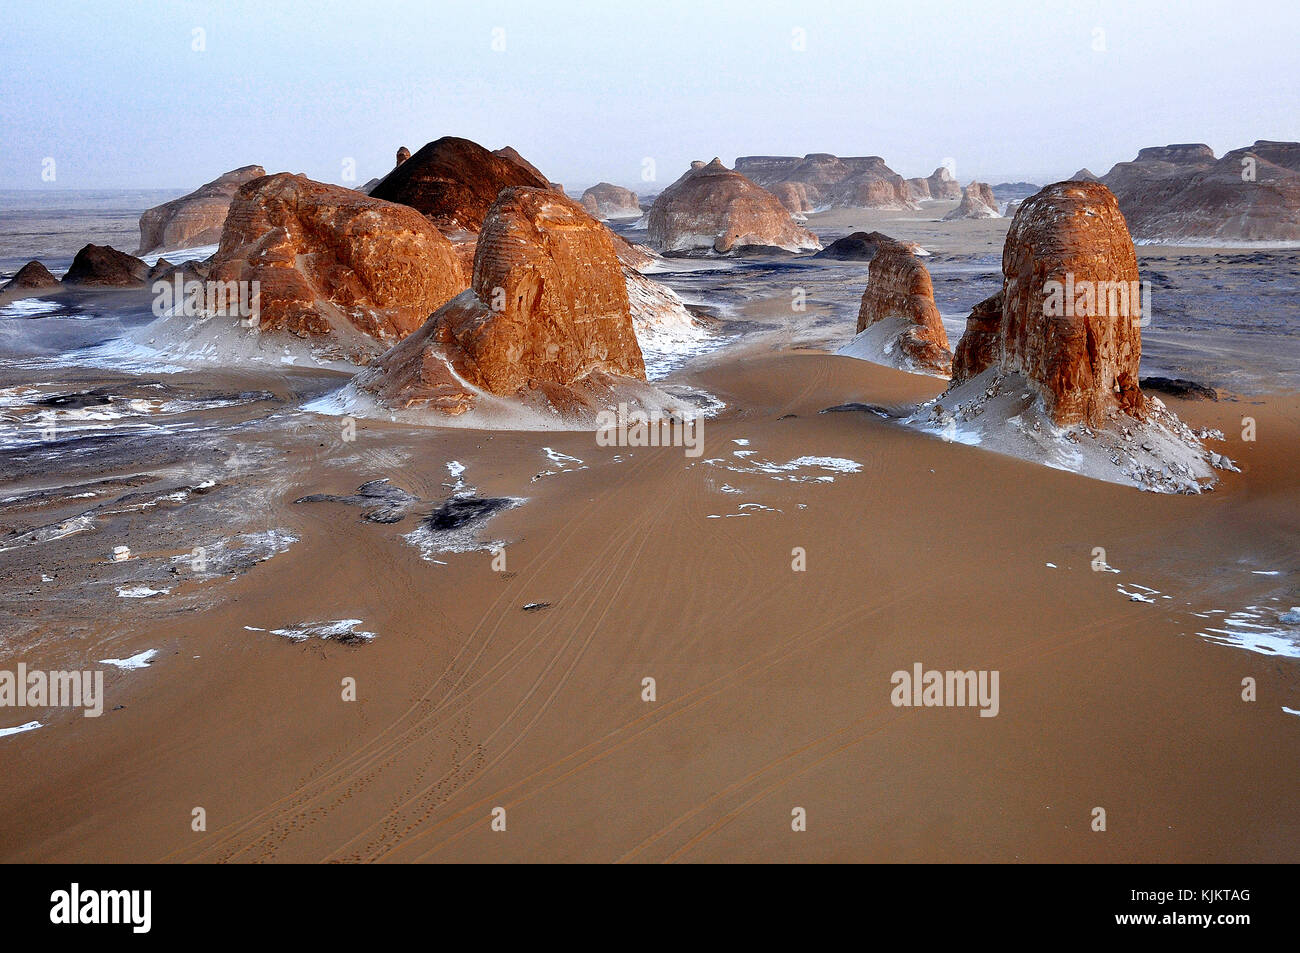 Agabat desert, Assiout province. Egypt. Stock Photo